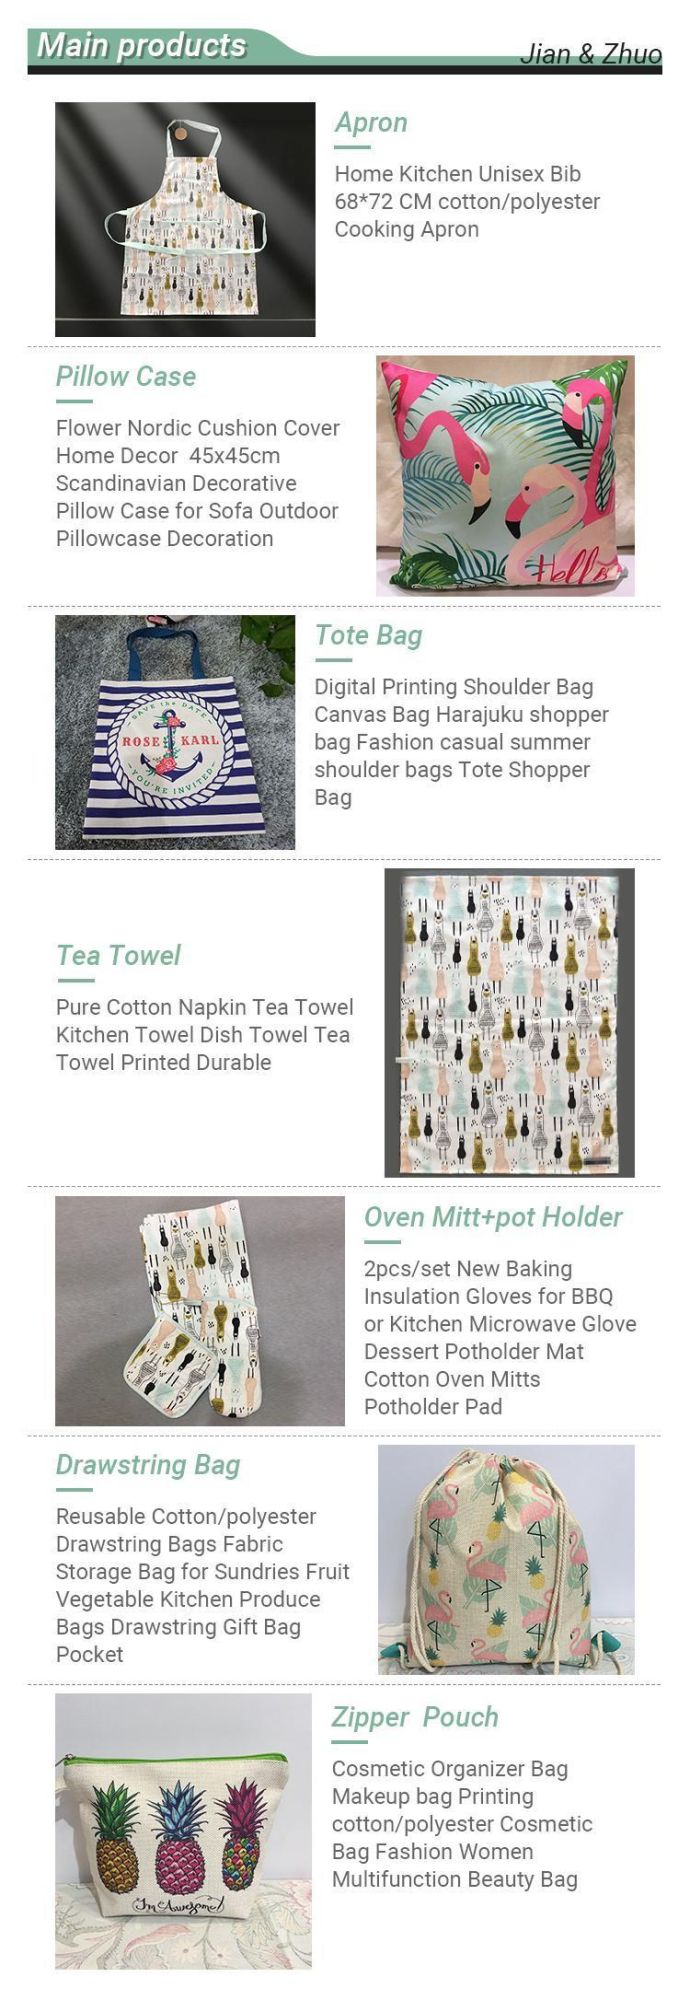 Custom Polyester Digital Printing Face Pillow Cushion